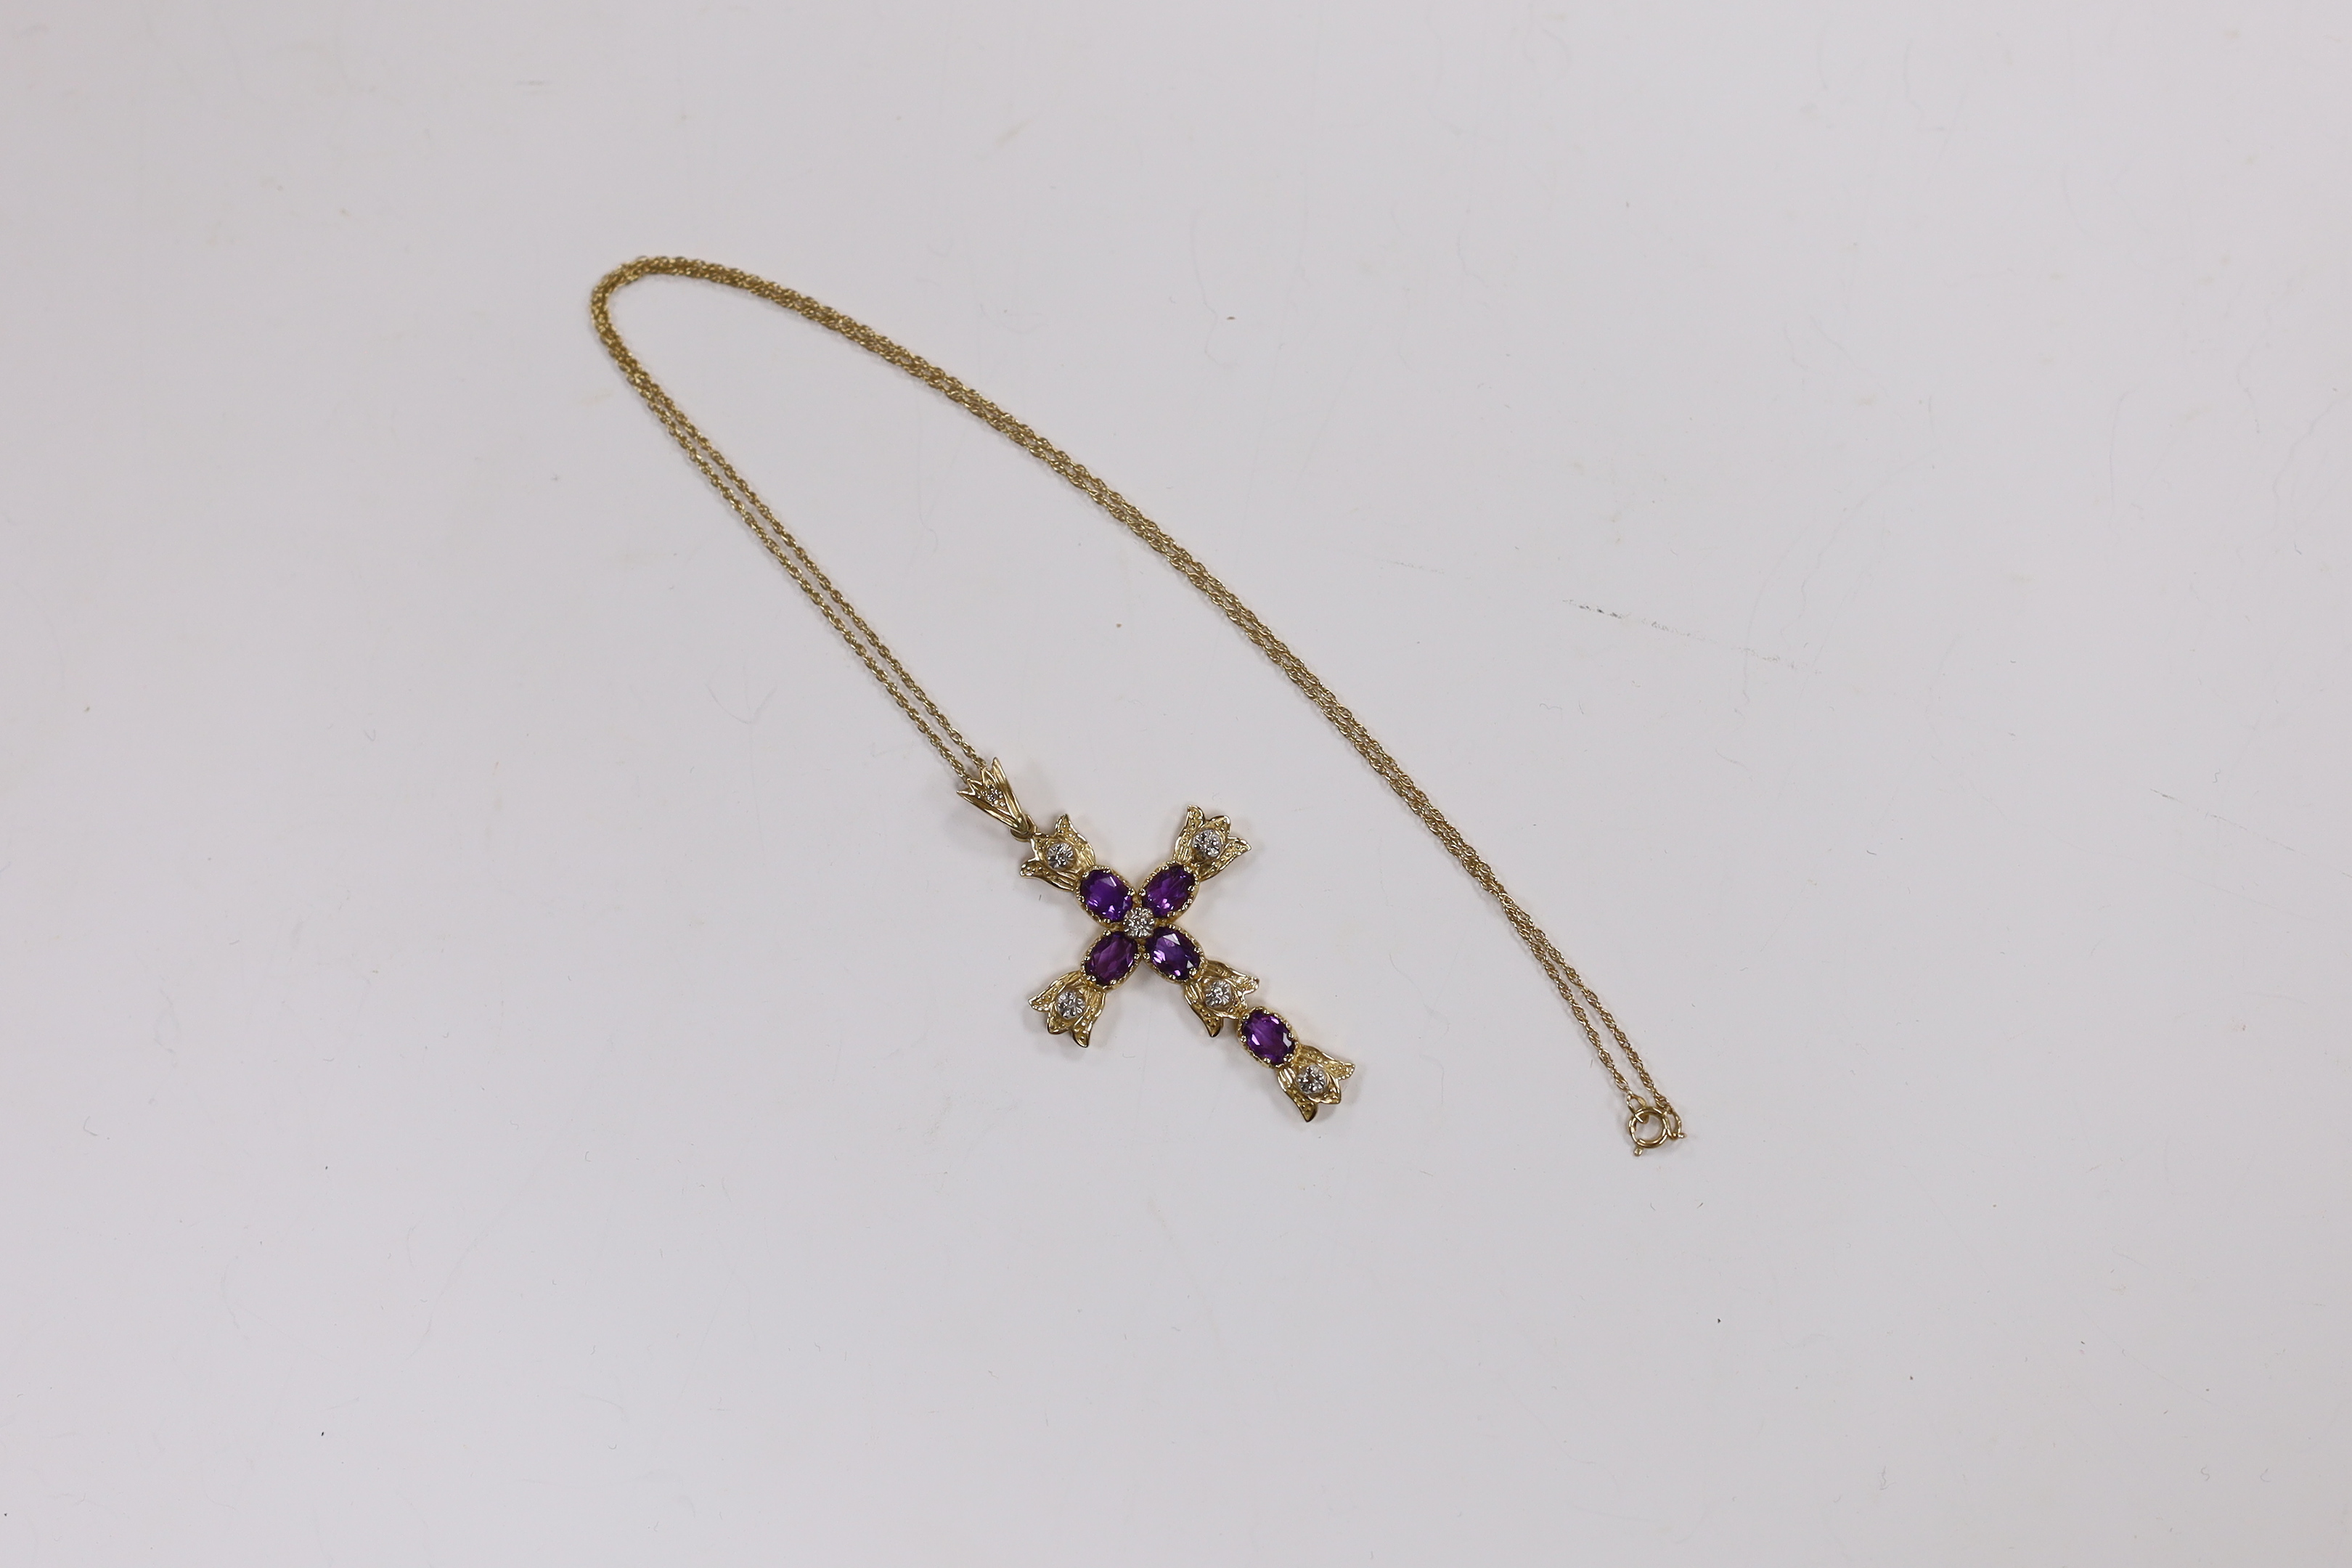 A modern 9k, amethyst and diamond cluster set cross pendant, 51mm, on a 585 yellow metal fine link chain, 45cm, gross weight 7.6 grams.